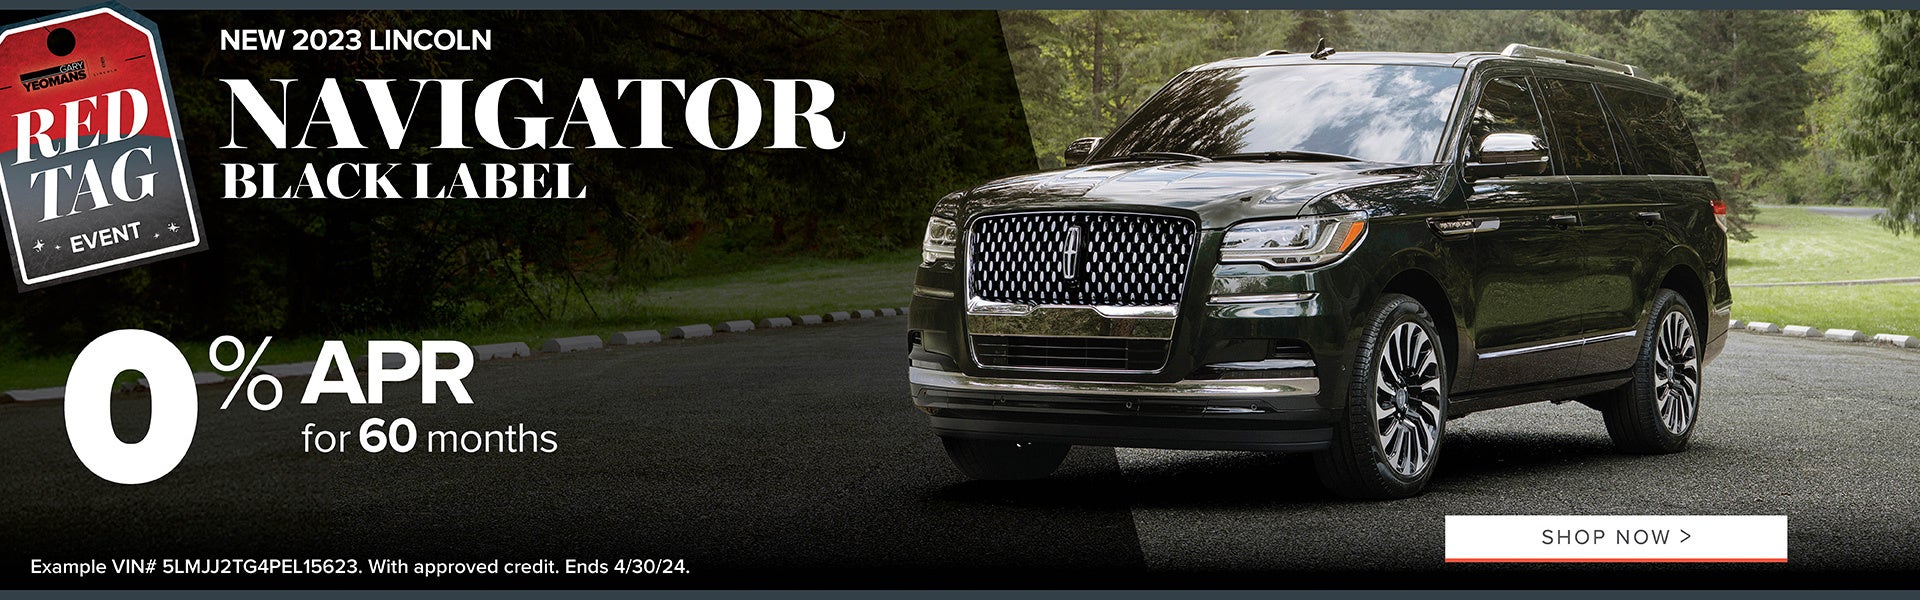 New 2023 Lincoln Navigator Black Label 0% APR